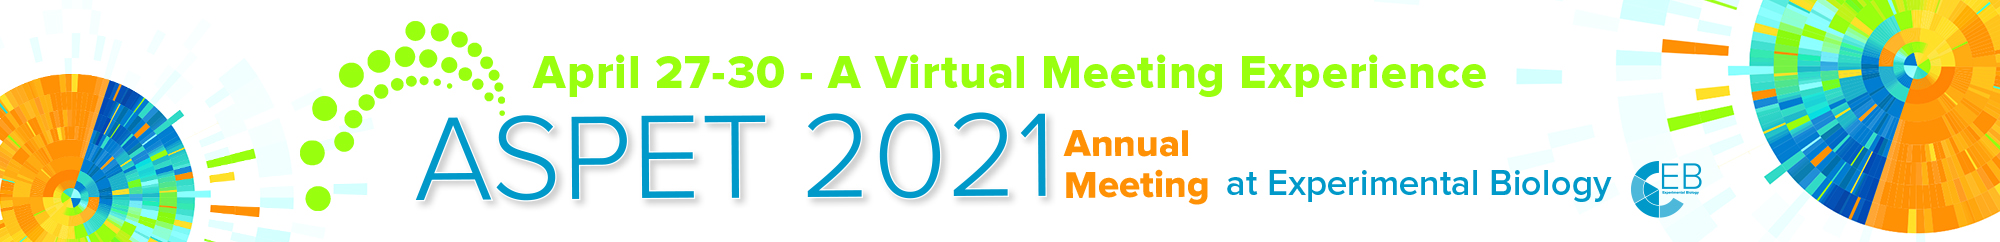 ASPET 2021 Annual Meeting